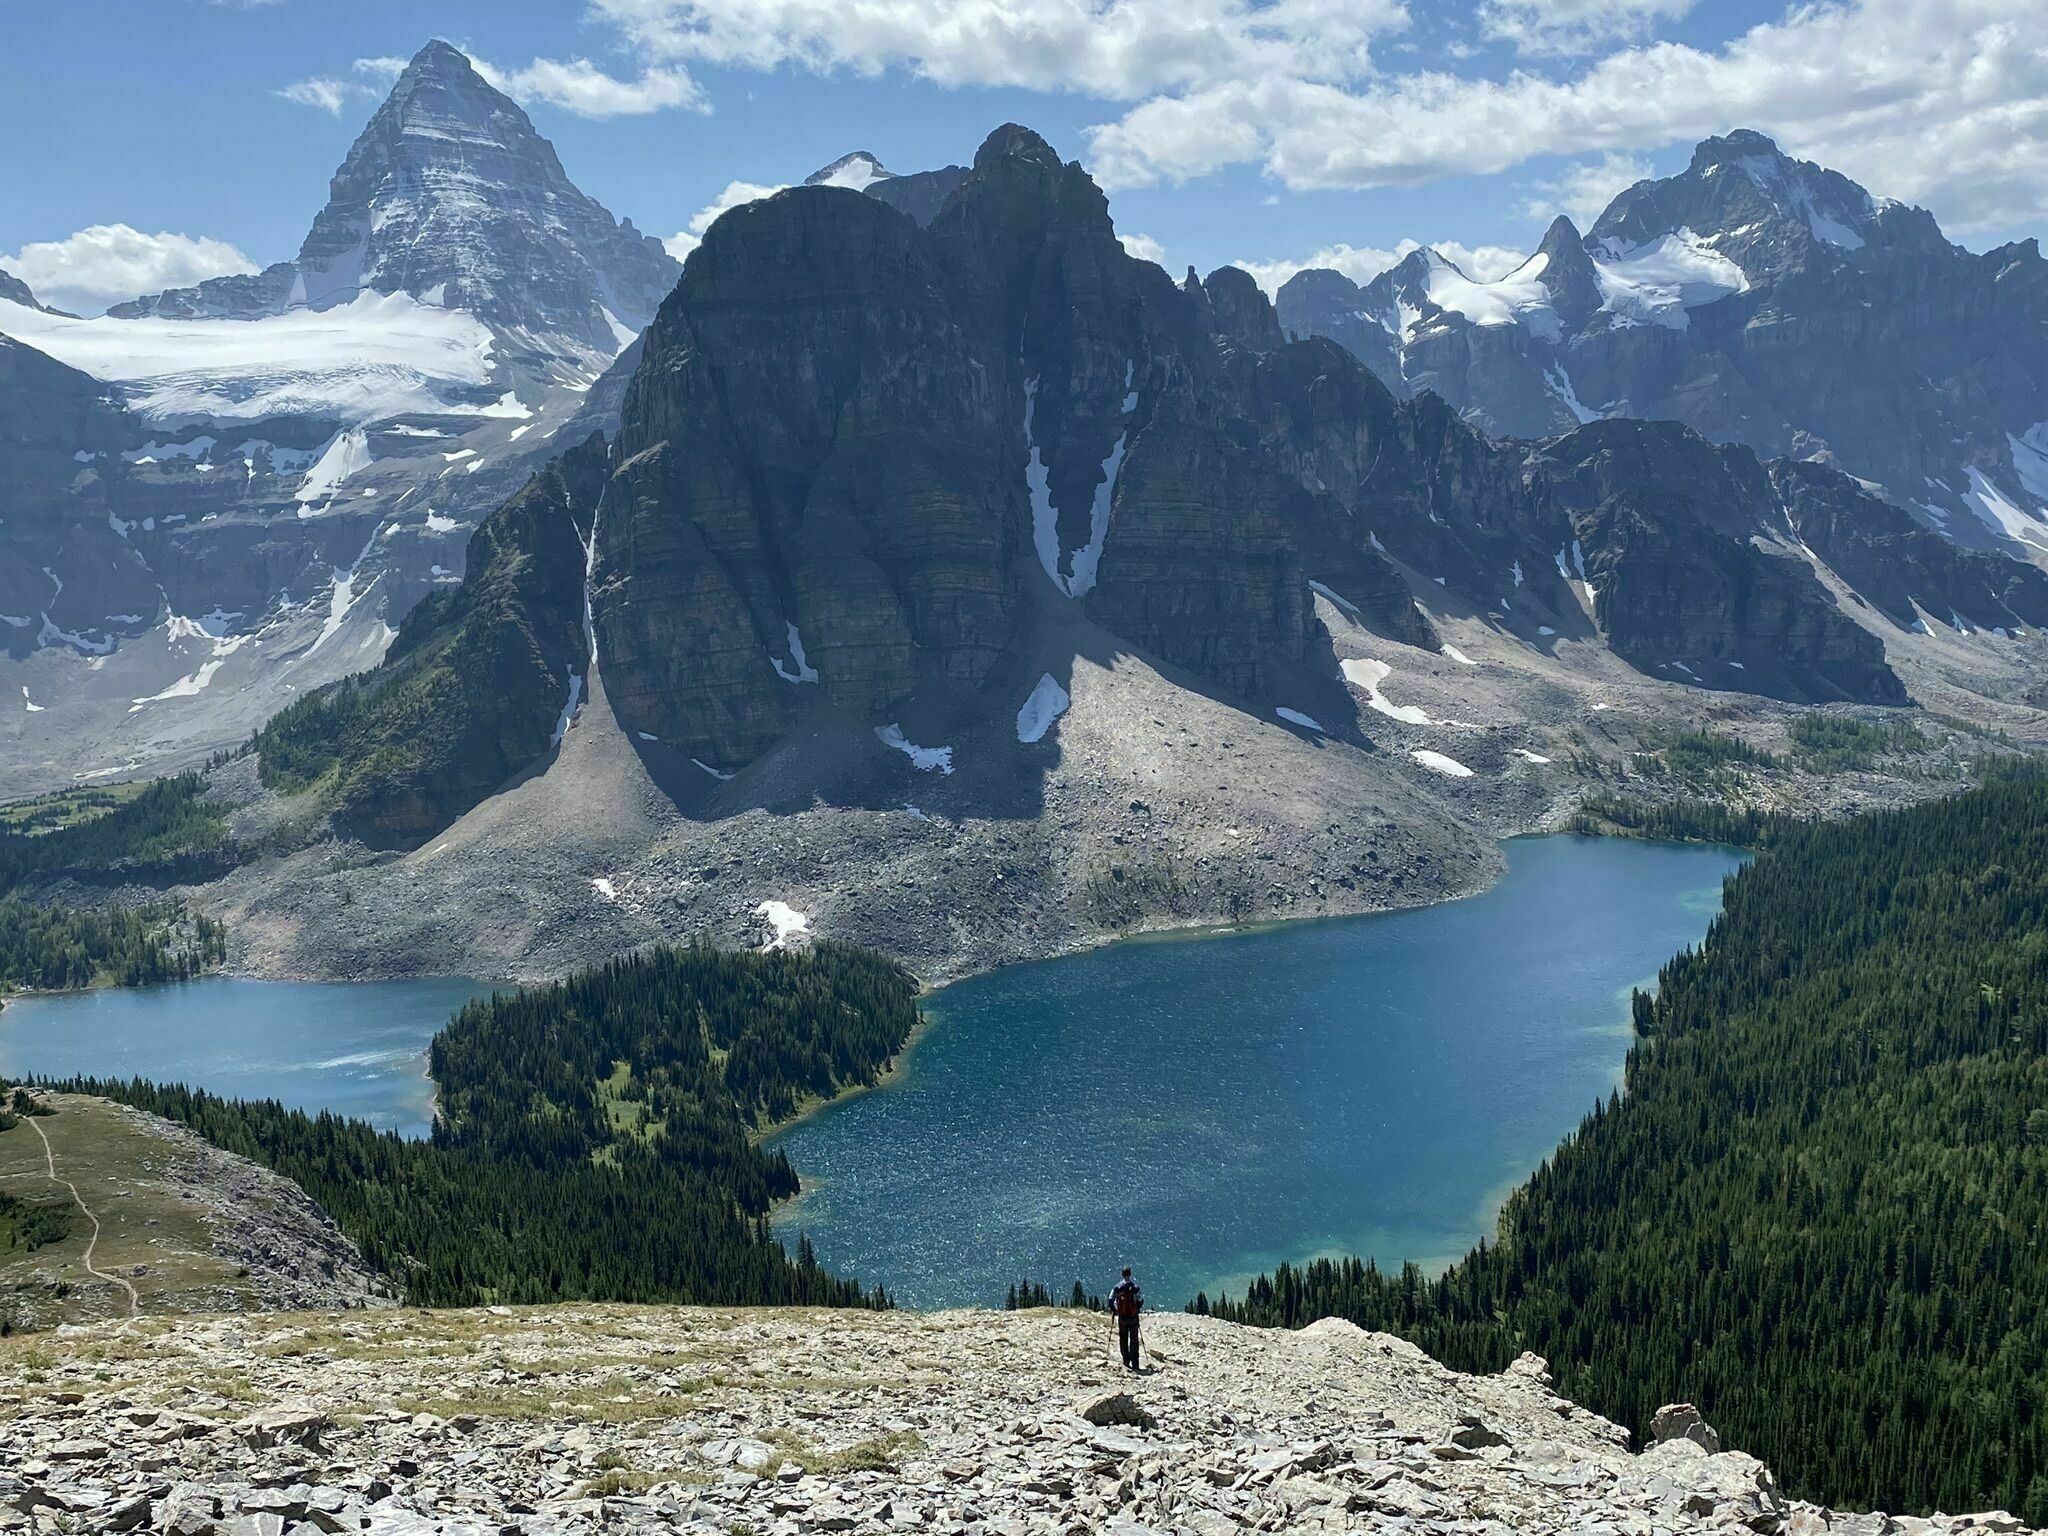 Photos of The Nub Peak from Mount .alltrails.com